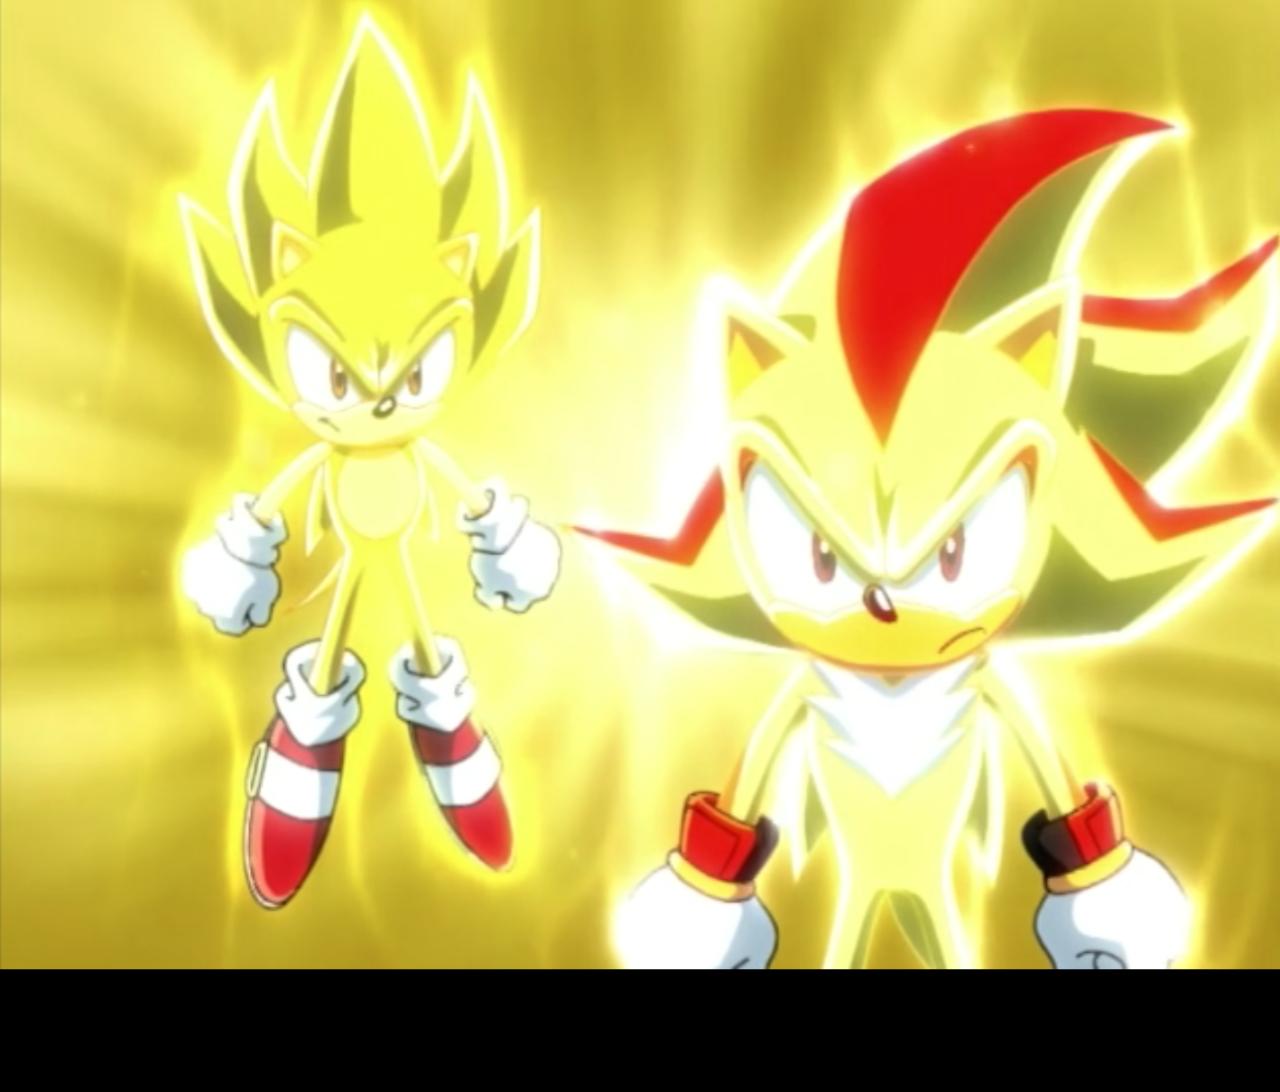 ShadowLifeman on X: Sonic Dark Forms - Dark Sonic, Dark Shadow, Dark  Tails, and Dark Knuckles #SonicTheHedgehog #ShadowTheHedgehog  #KnucklesTheEchidna #MilesTailsPrower #Tails #SonicX #Sega  #artistsontwitter  / X